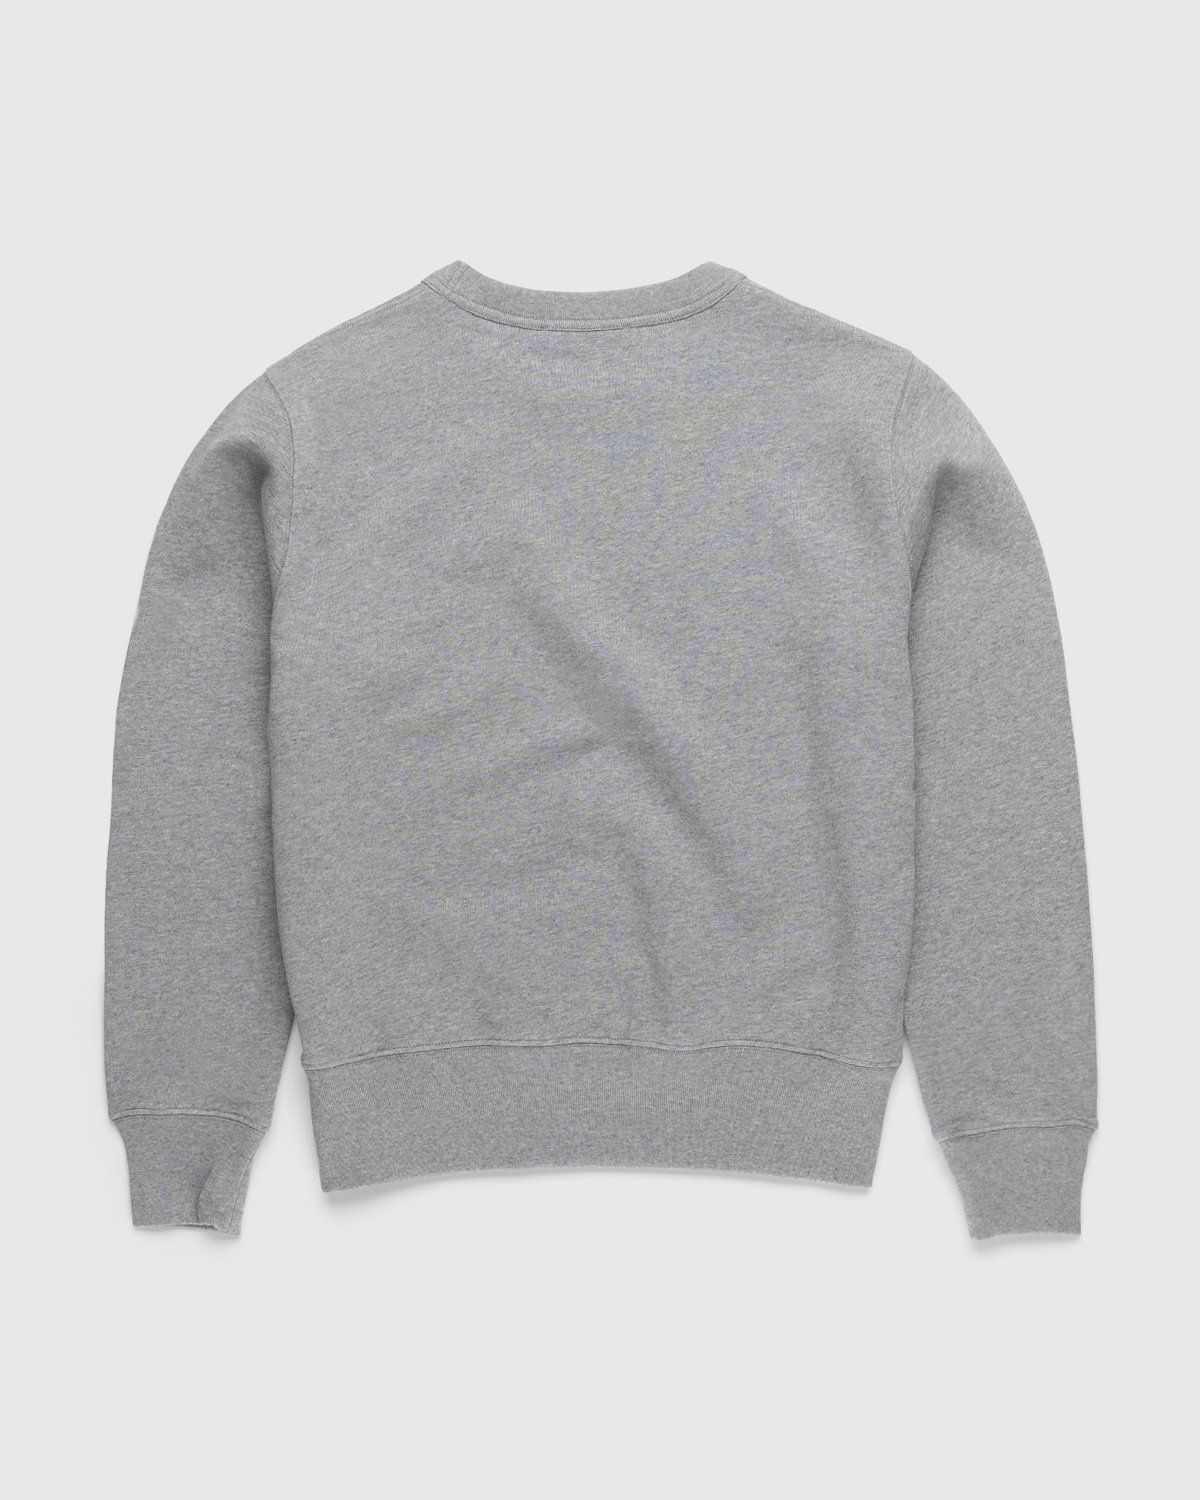 Acne Studios – Organic Cotton Crewneck Sweatshirt Light Grey Melange - Sweats - Grey - Image 2